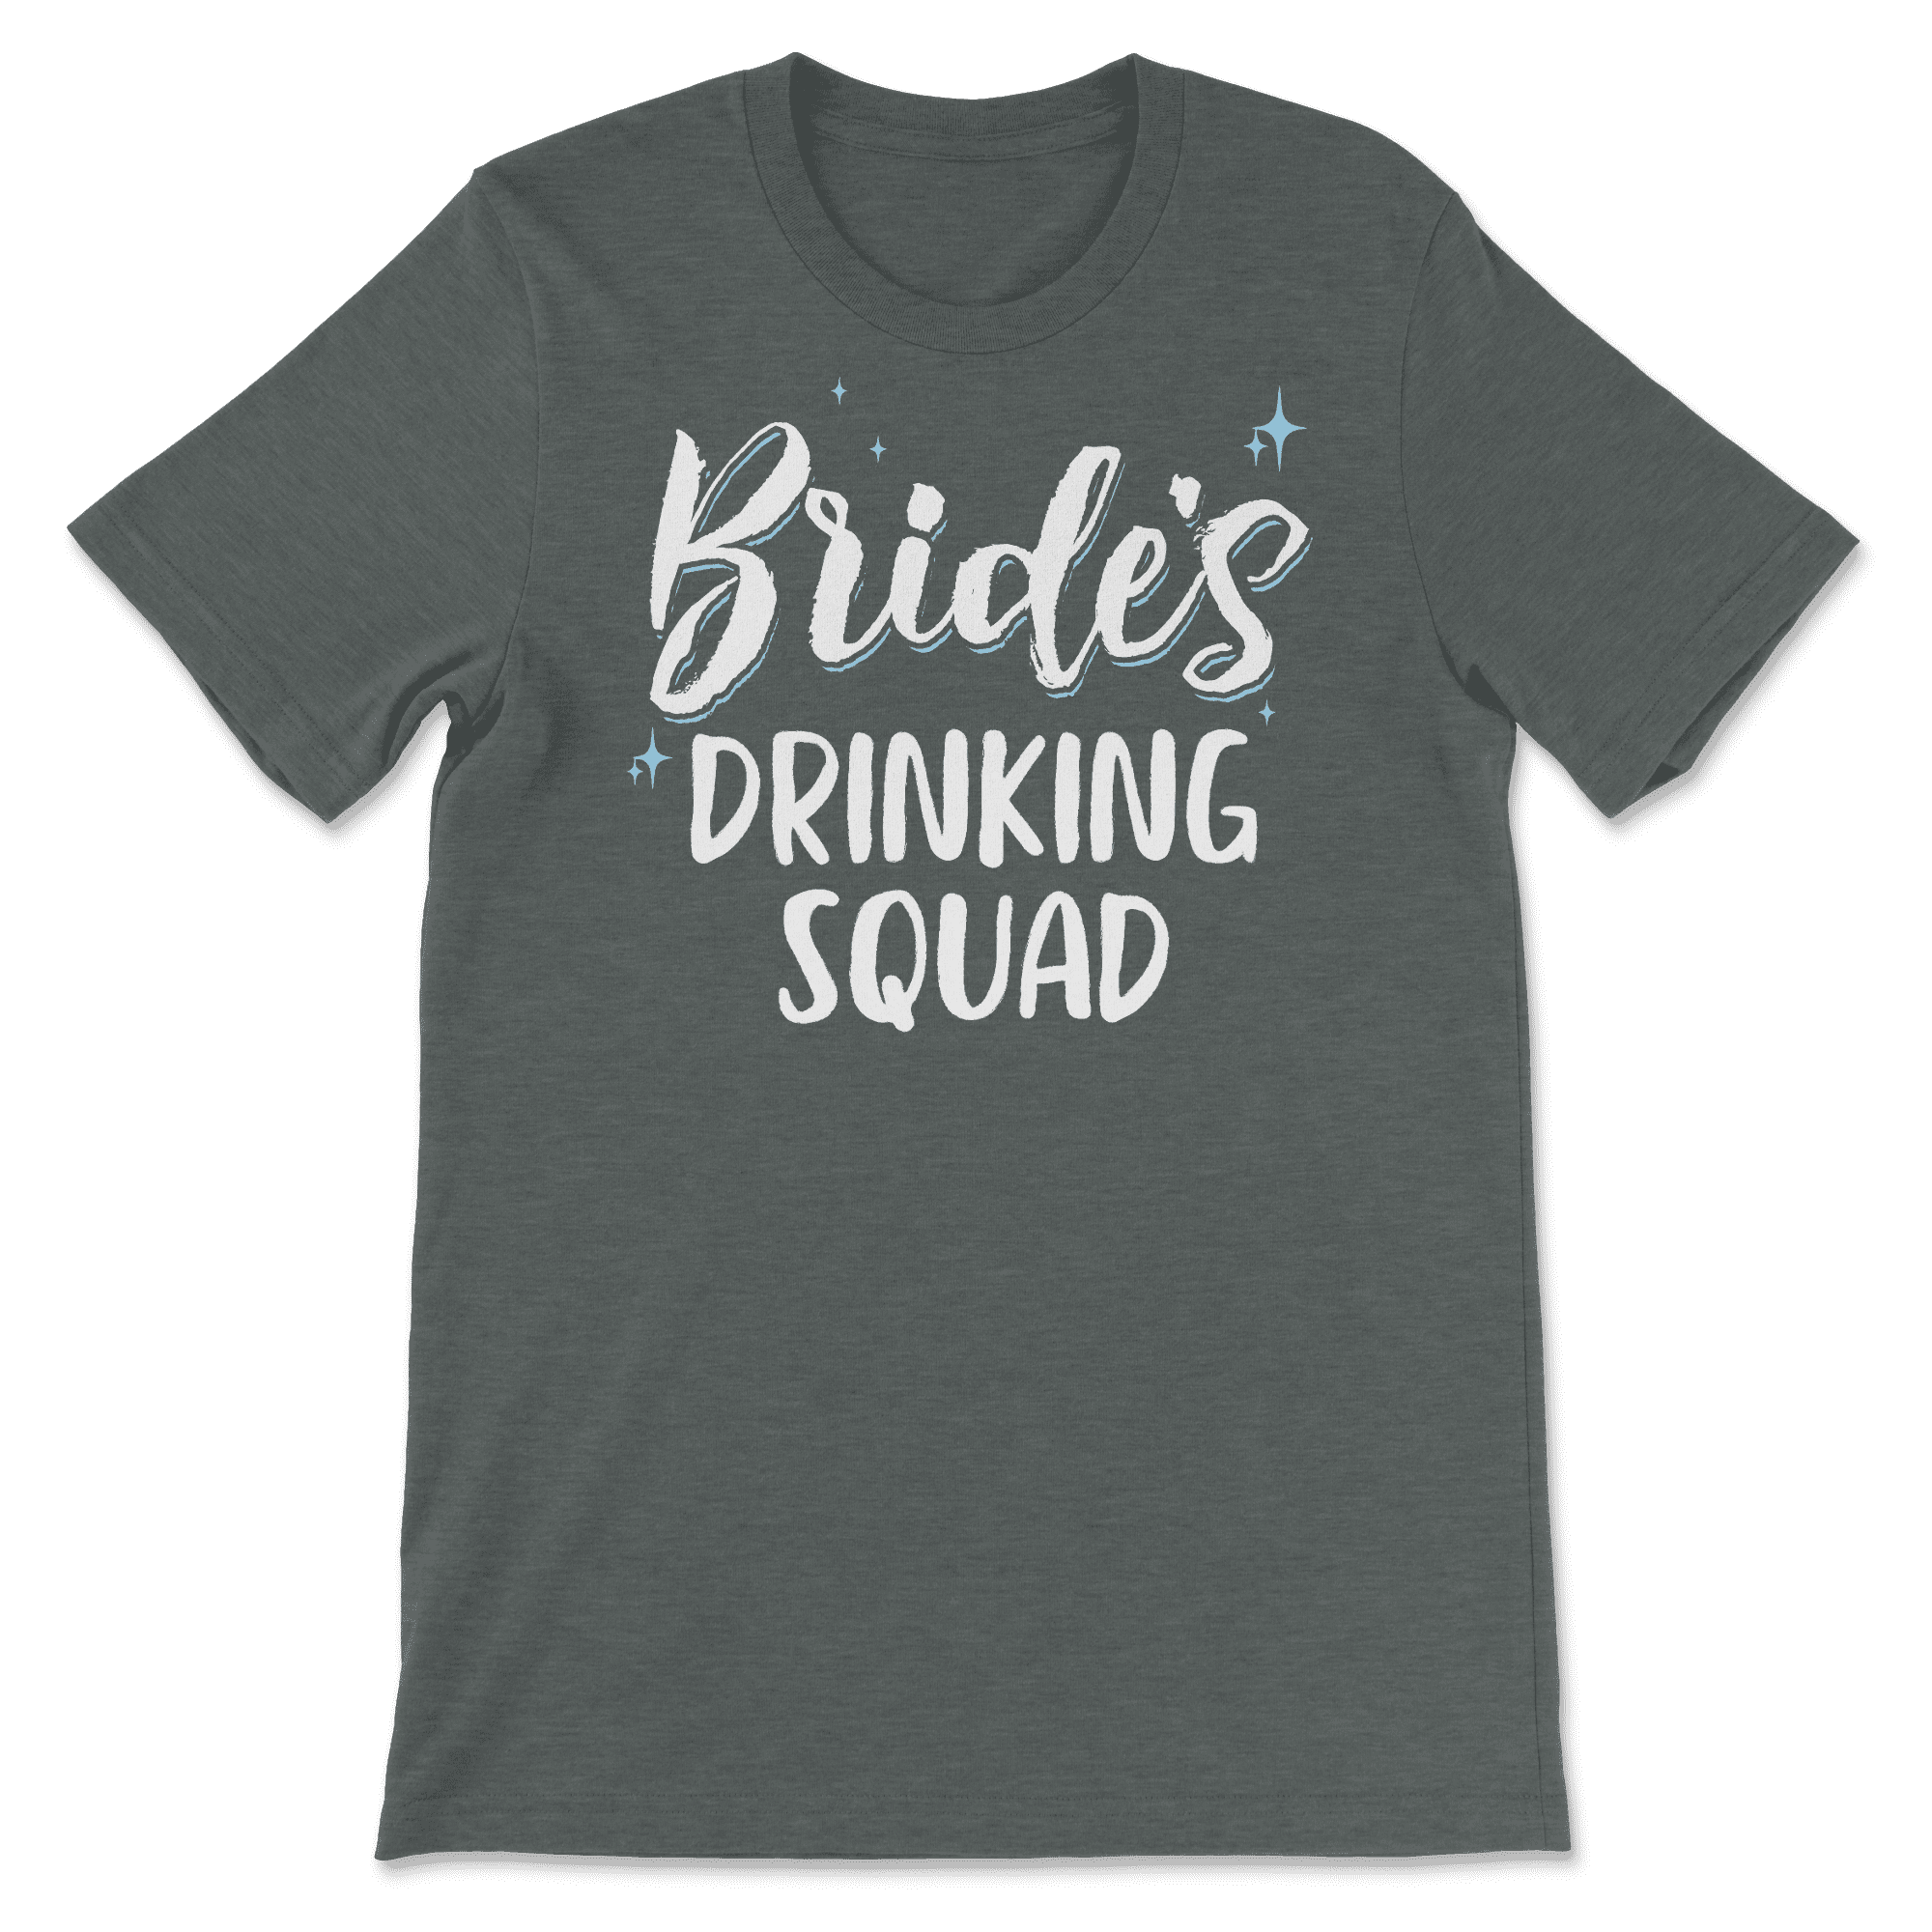 Drinking Squad - Funny Bridesmaid and Bride Shirt Set 